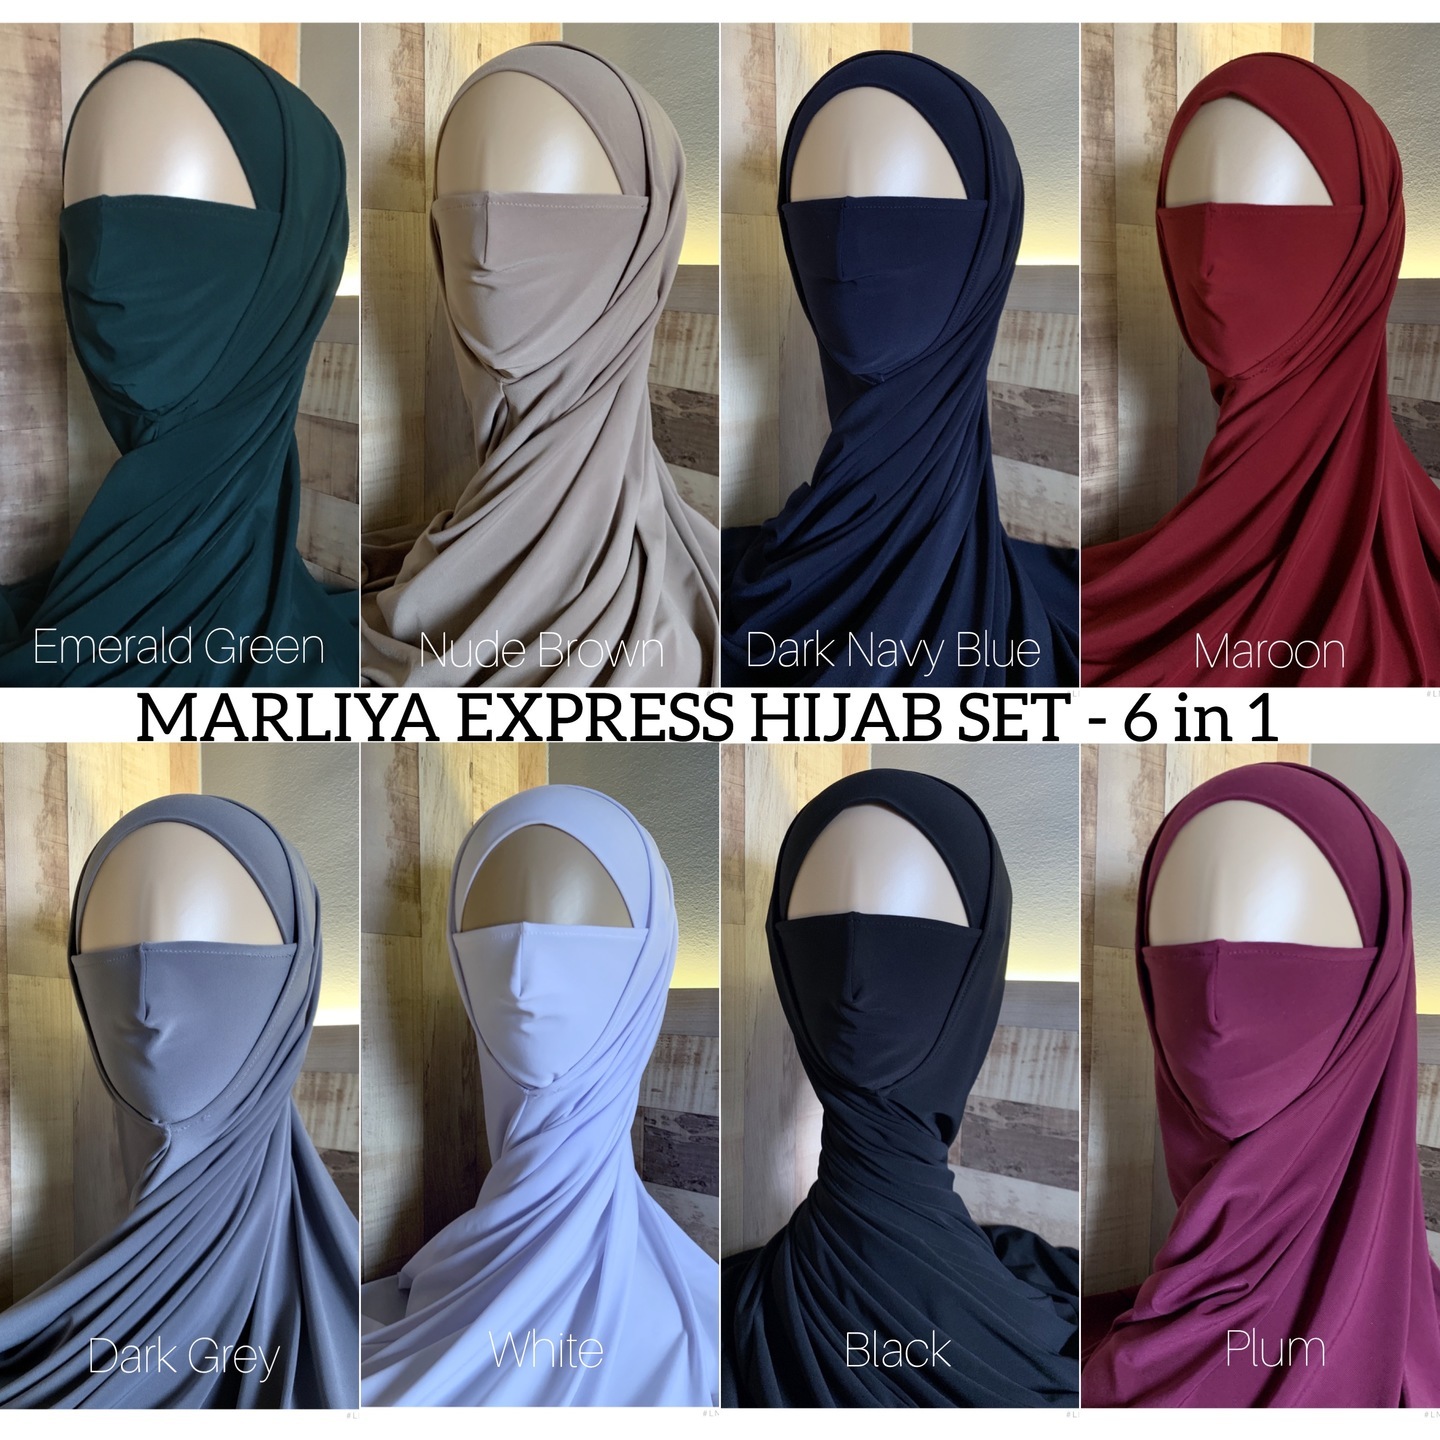 Marliya Express Hijab Set 6 in 1